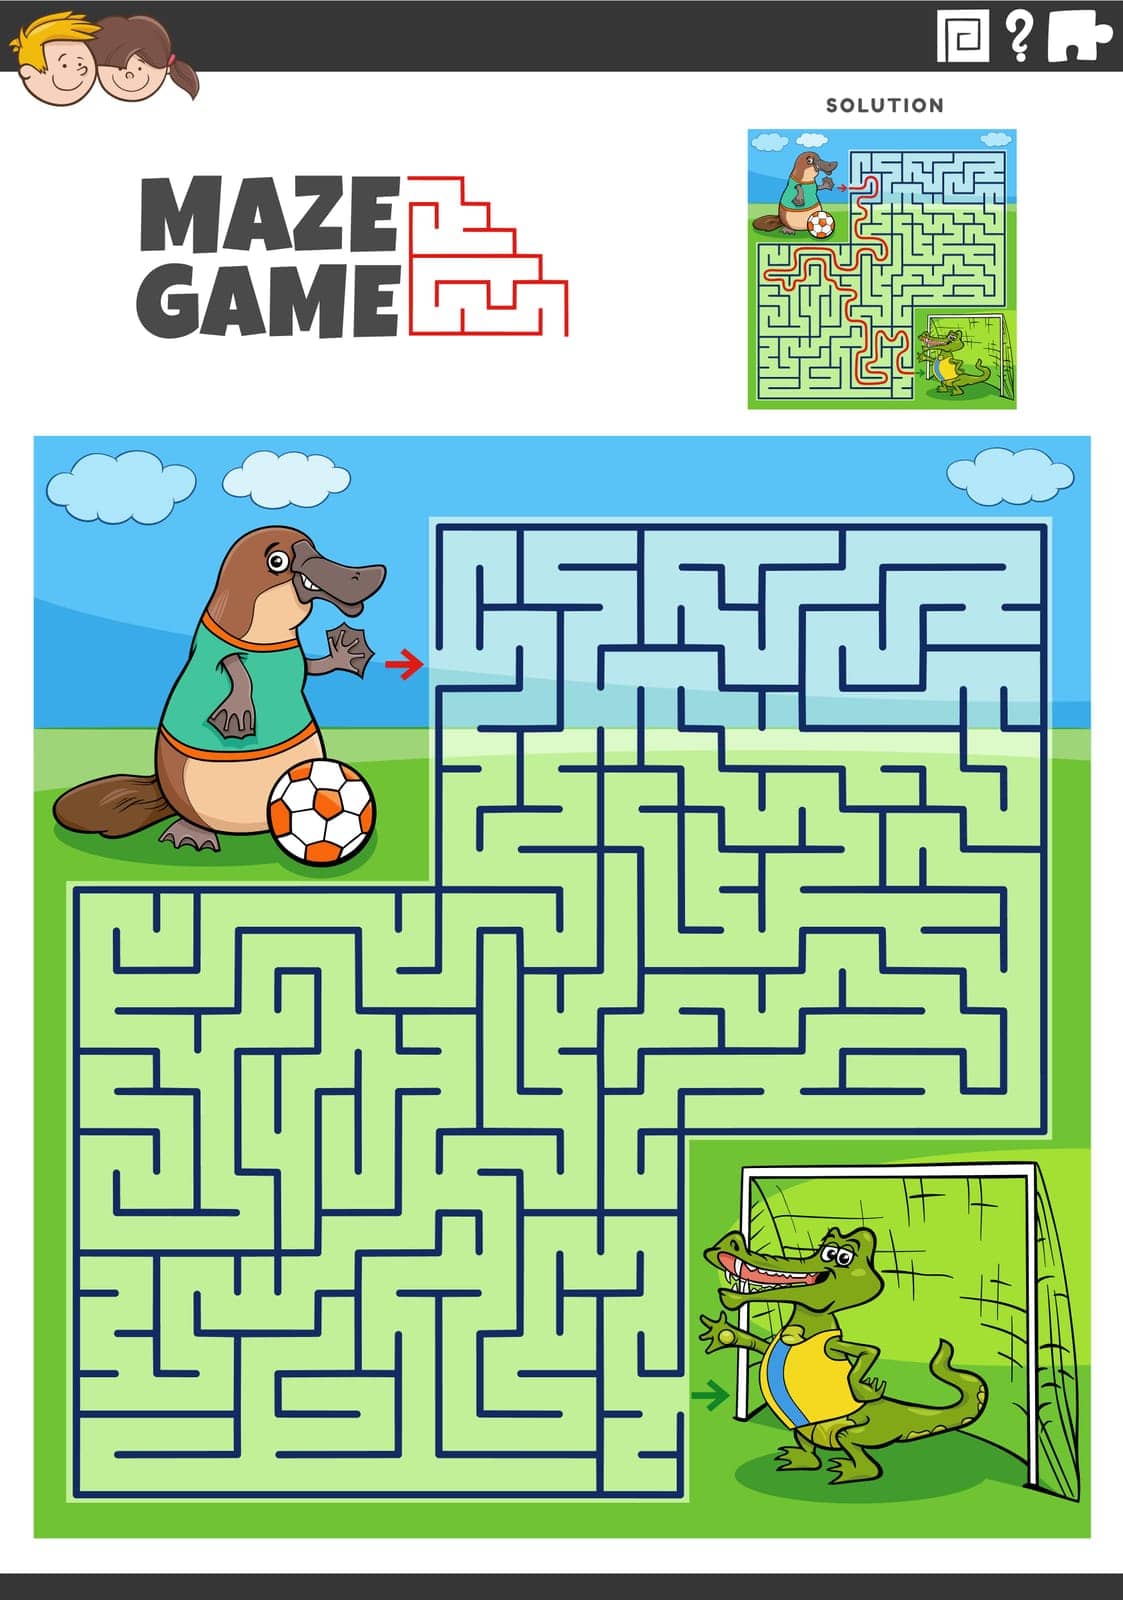 maze game activity with cartoon animals playing soccer by izakowski